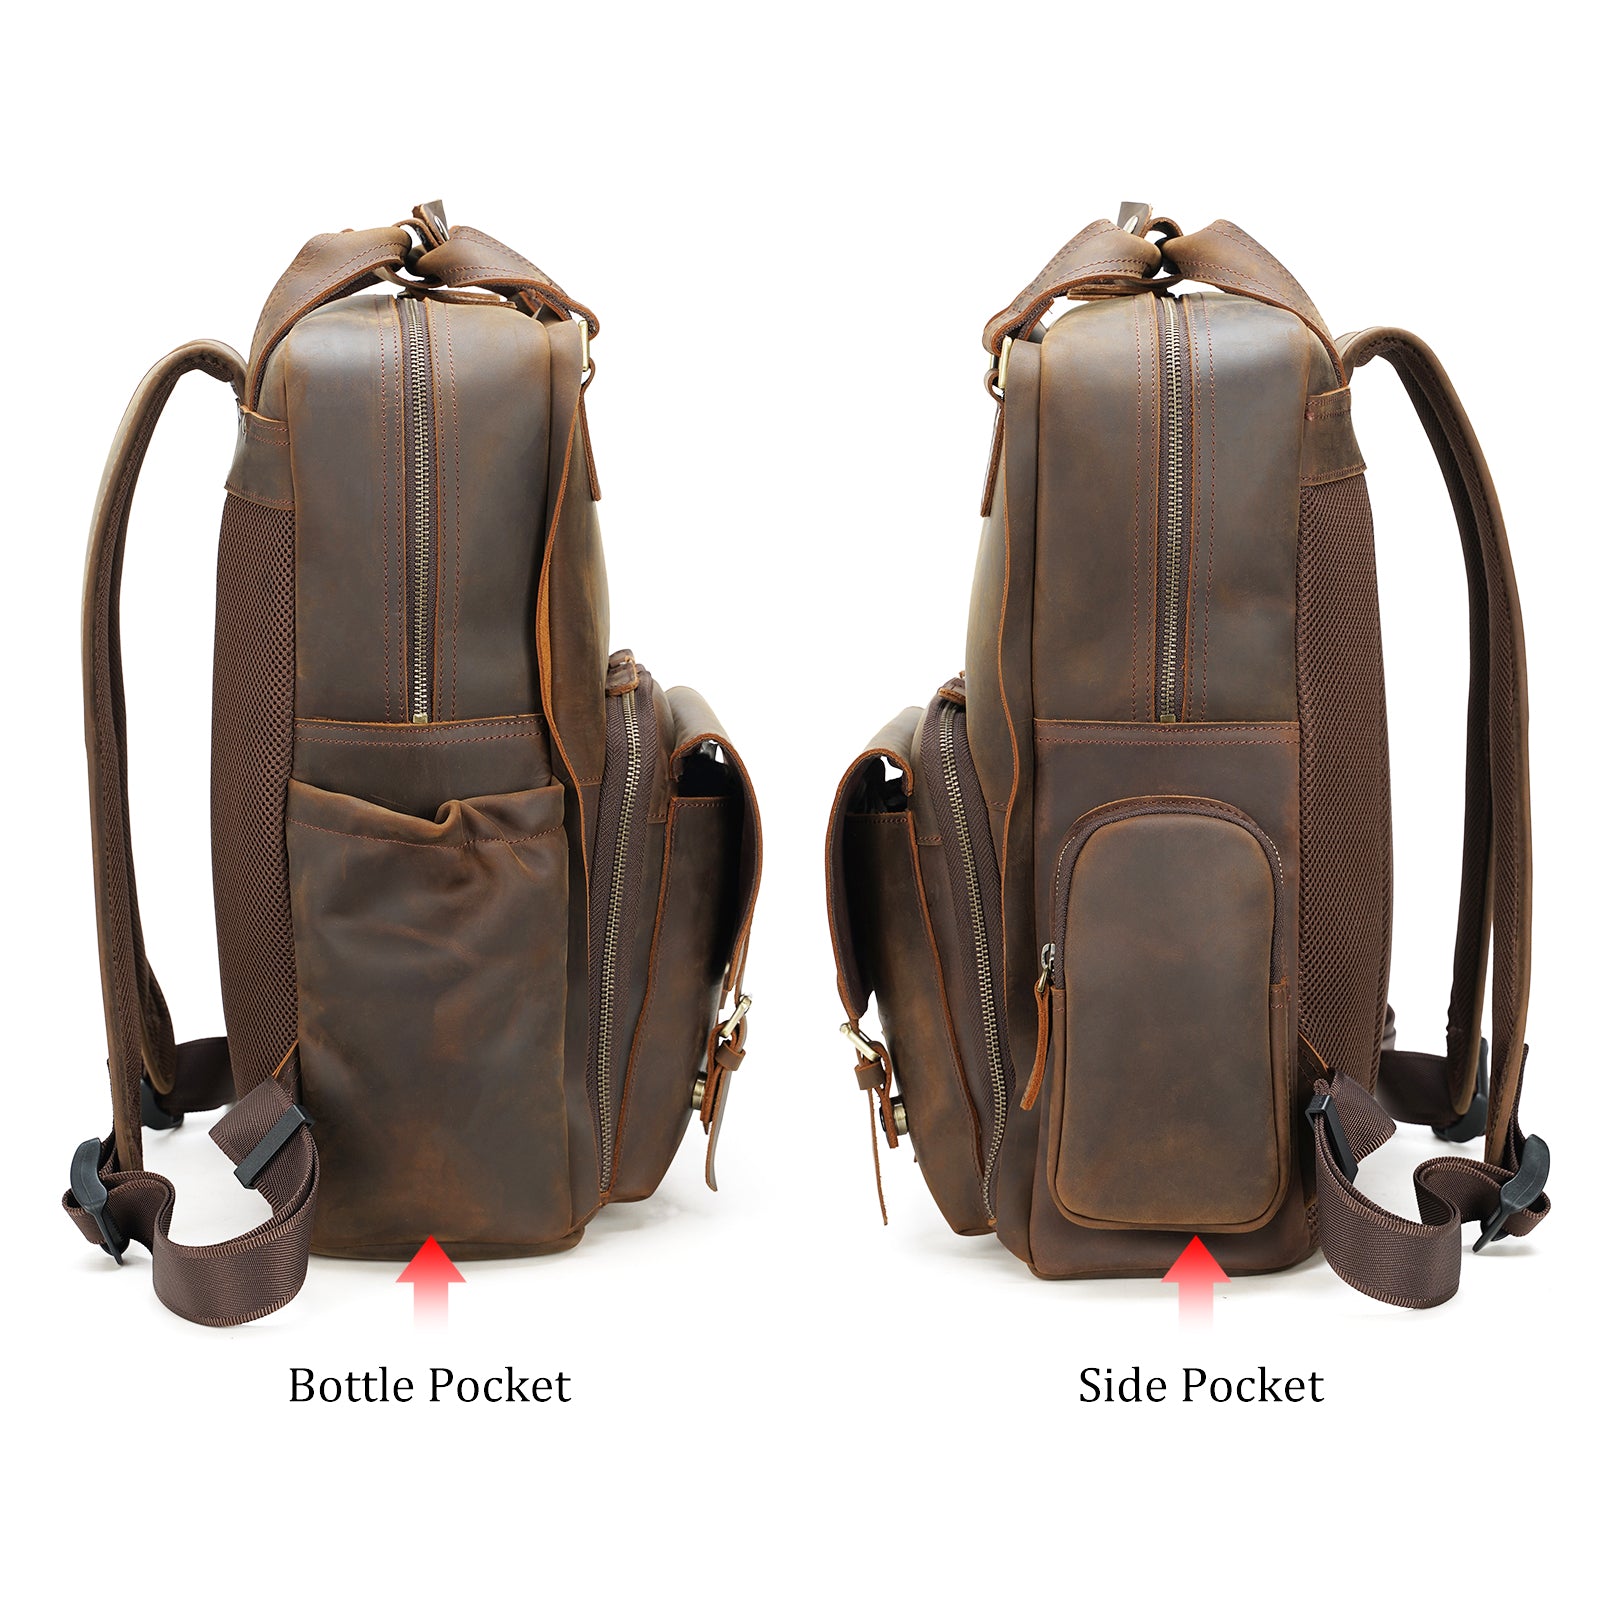 Polare Full Grain Italian Leather Backpack 15.6 Inch Laptop Bag Hiking Travel Rucksack (Side Pockets)